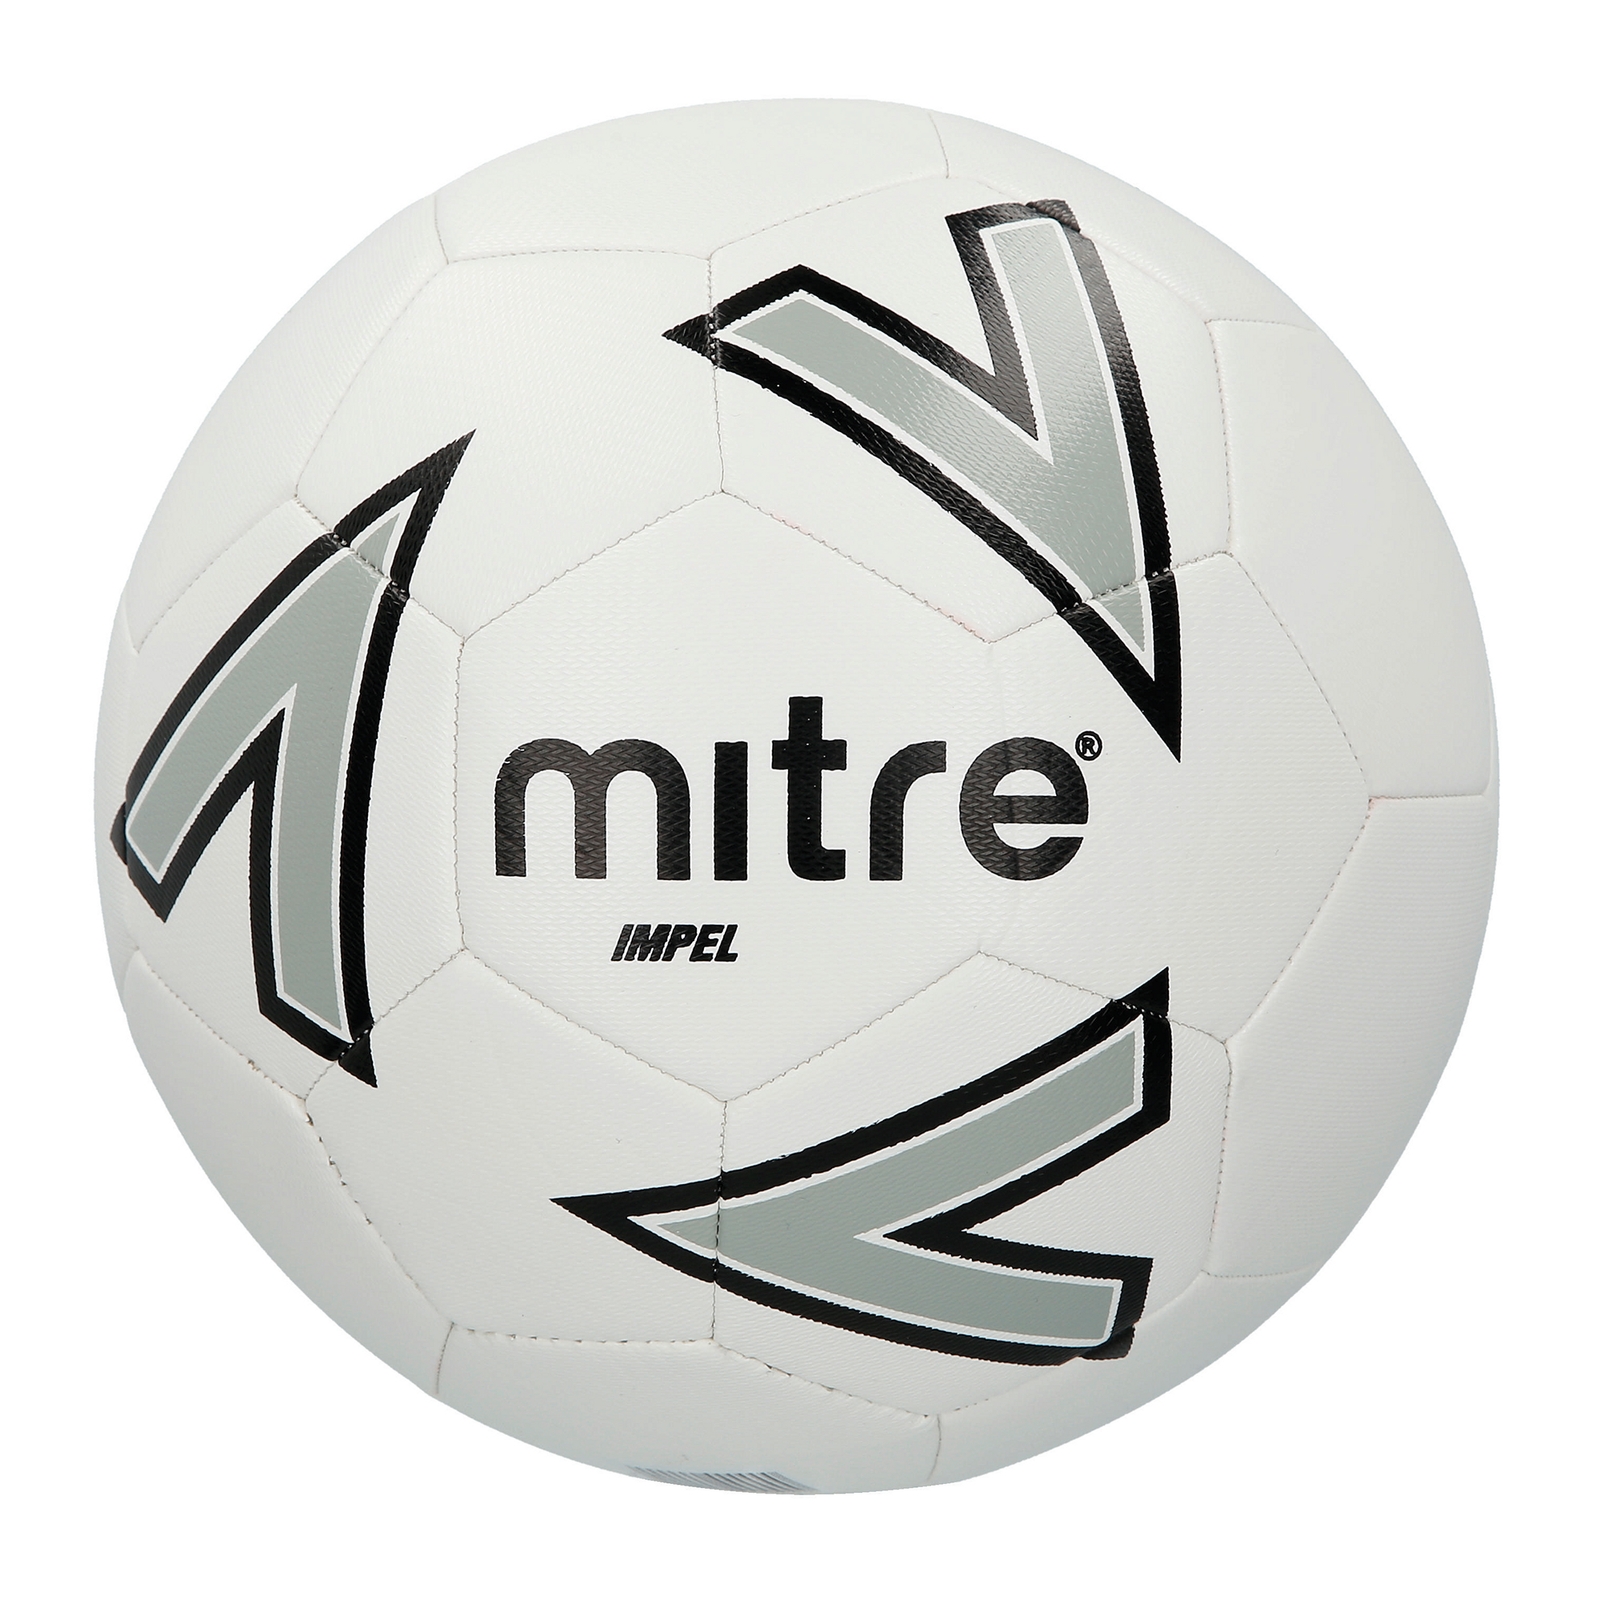 Mitre Impel Football - Size 3 - White/Silver/Black